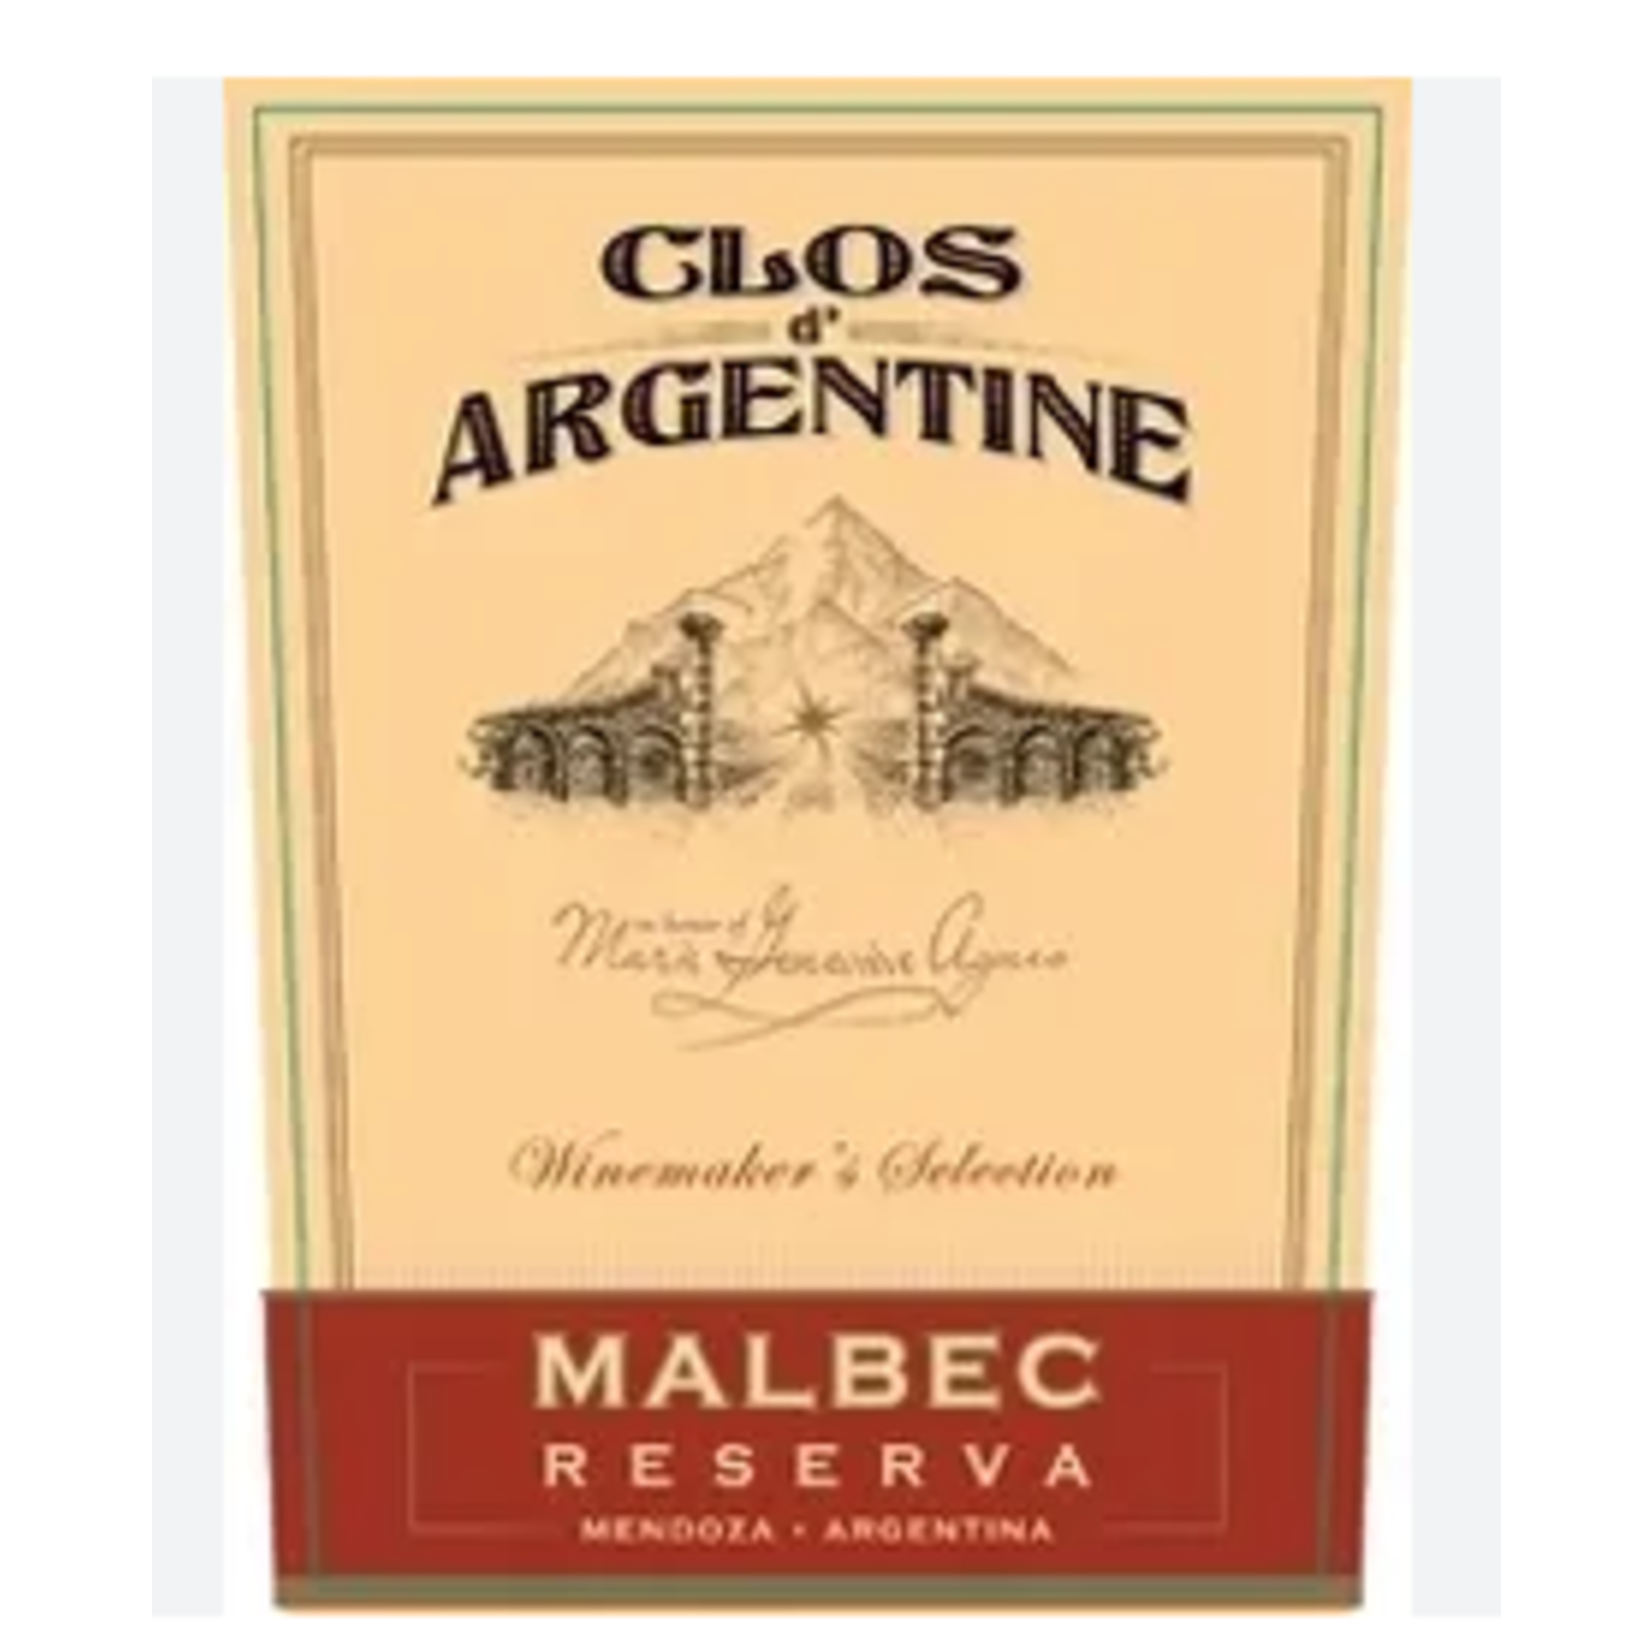 La Truite S.A. Clos d' Argentine Winemaker's Selection Malbec Reserva 2014 Mendoza, Argentina  91pts-WE